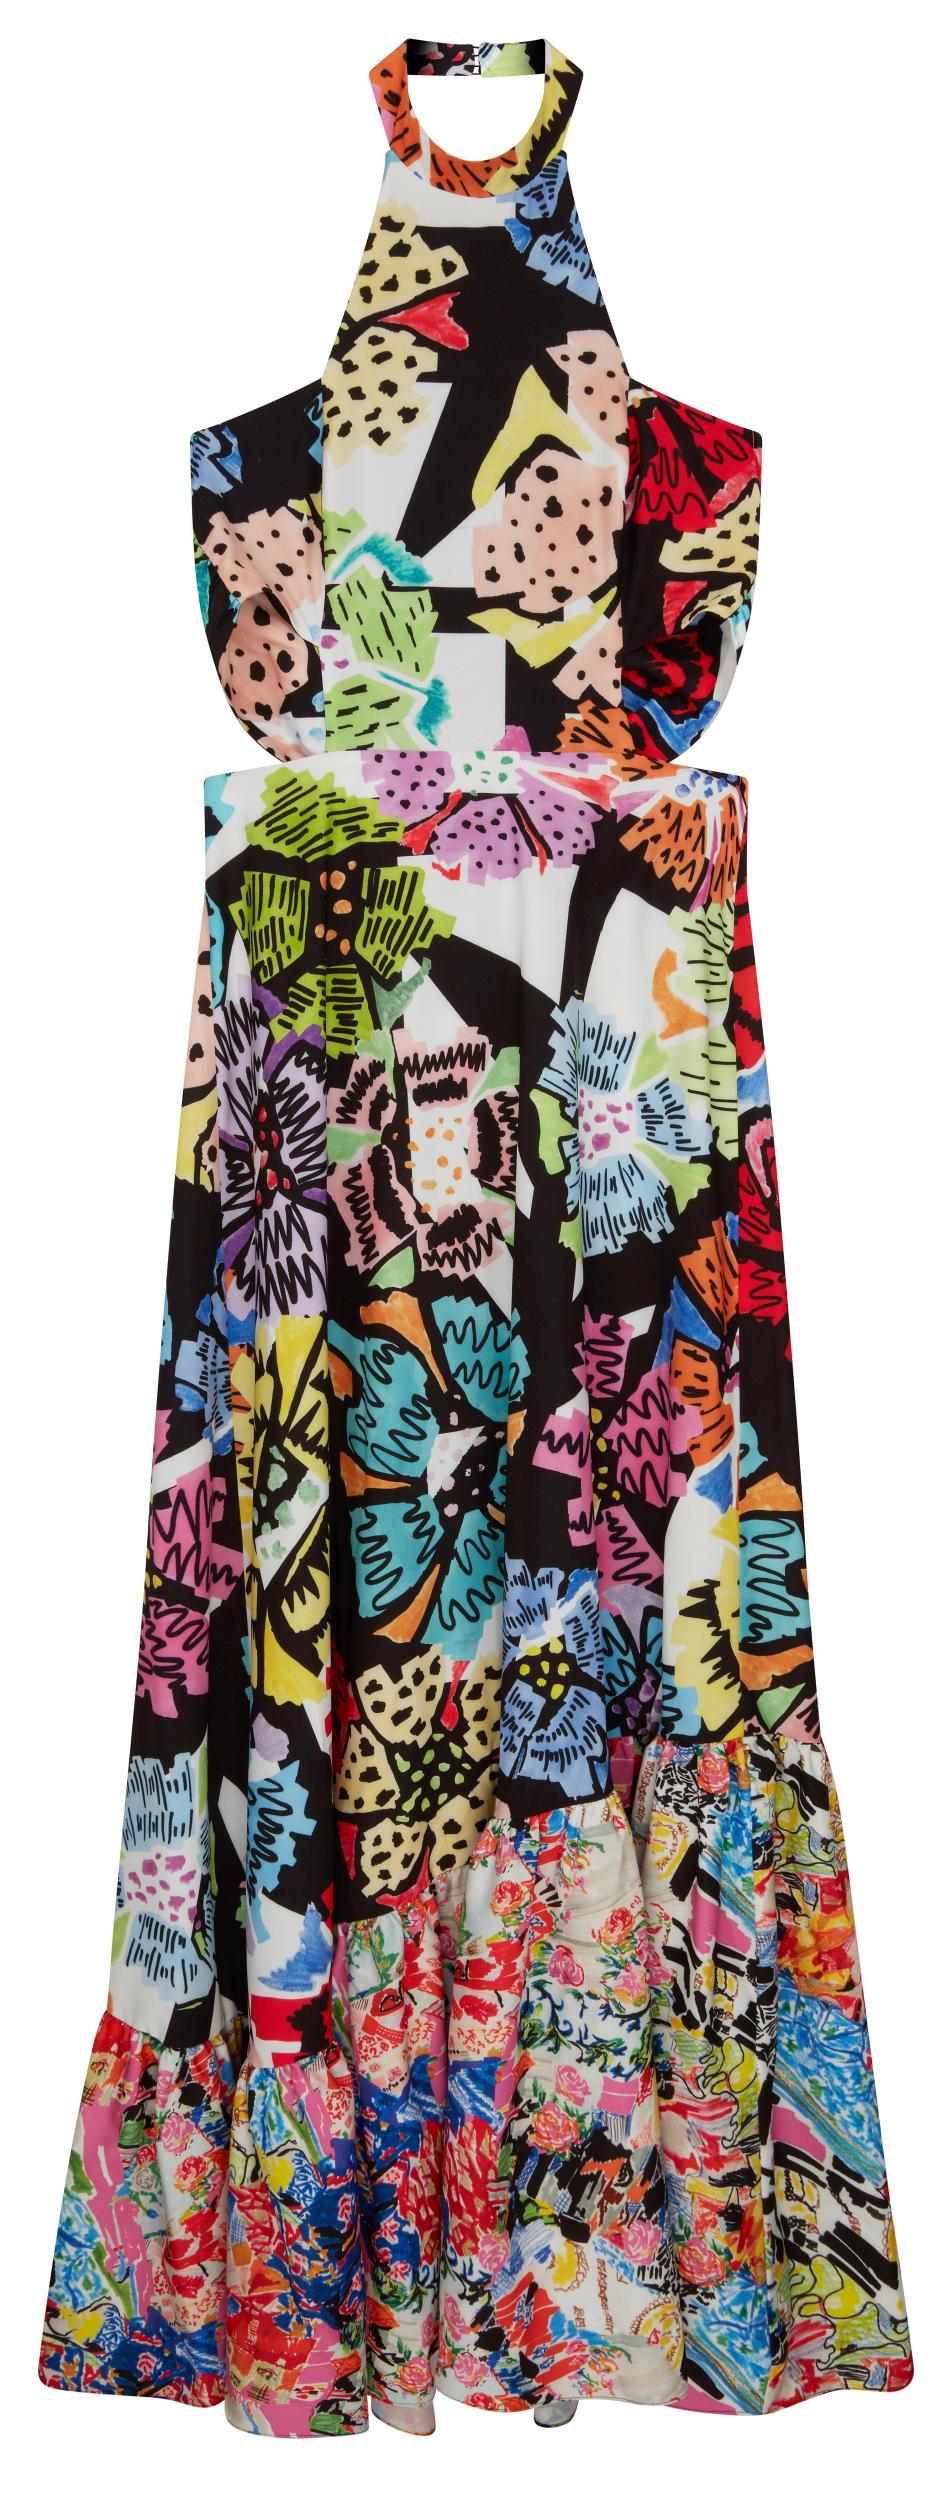 ASOS Made In Kenya High Neck Maxi Dress In Mixed Print, £58